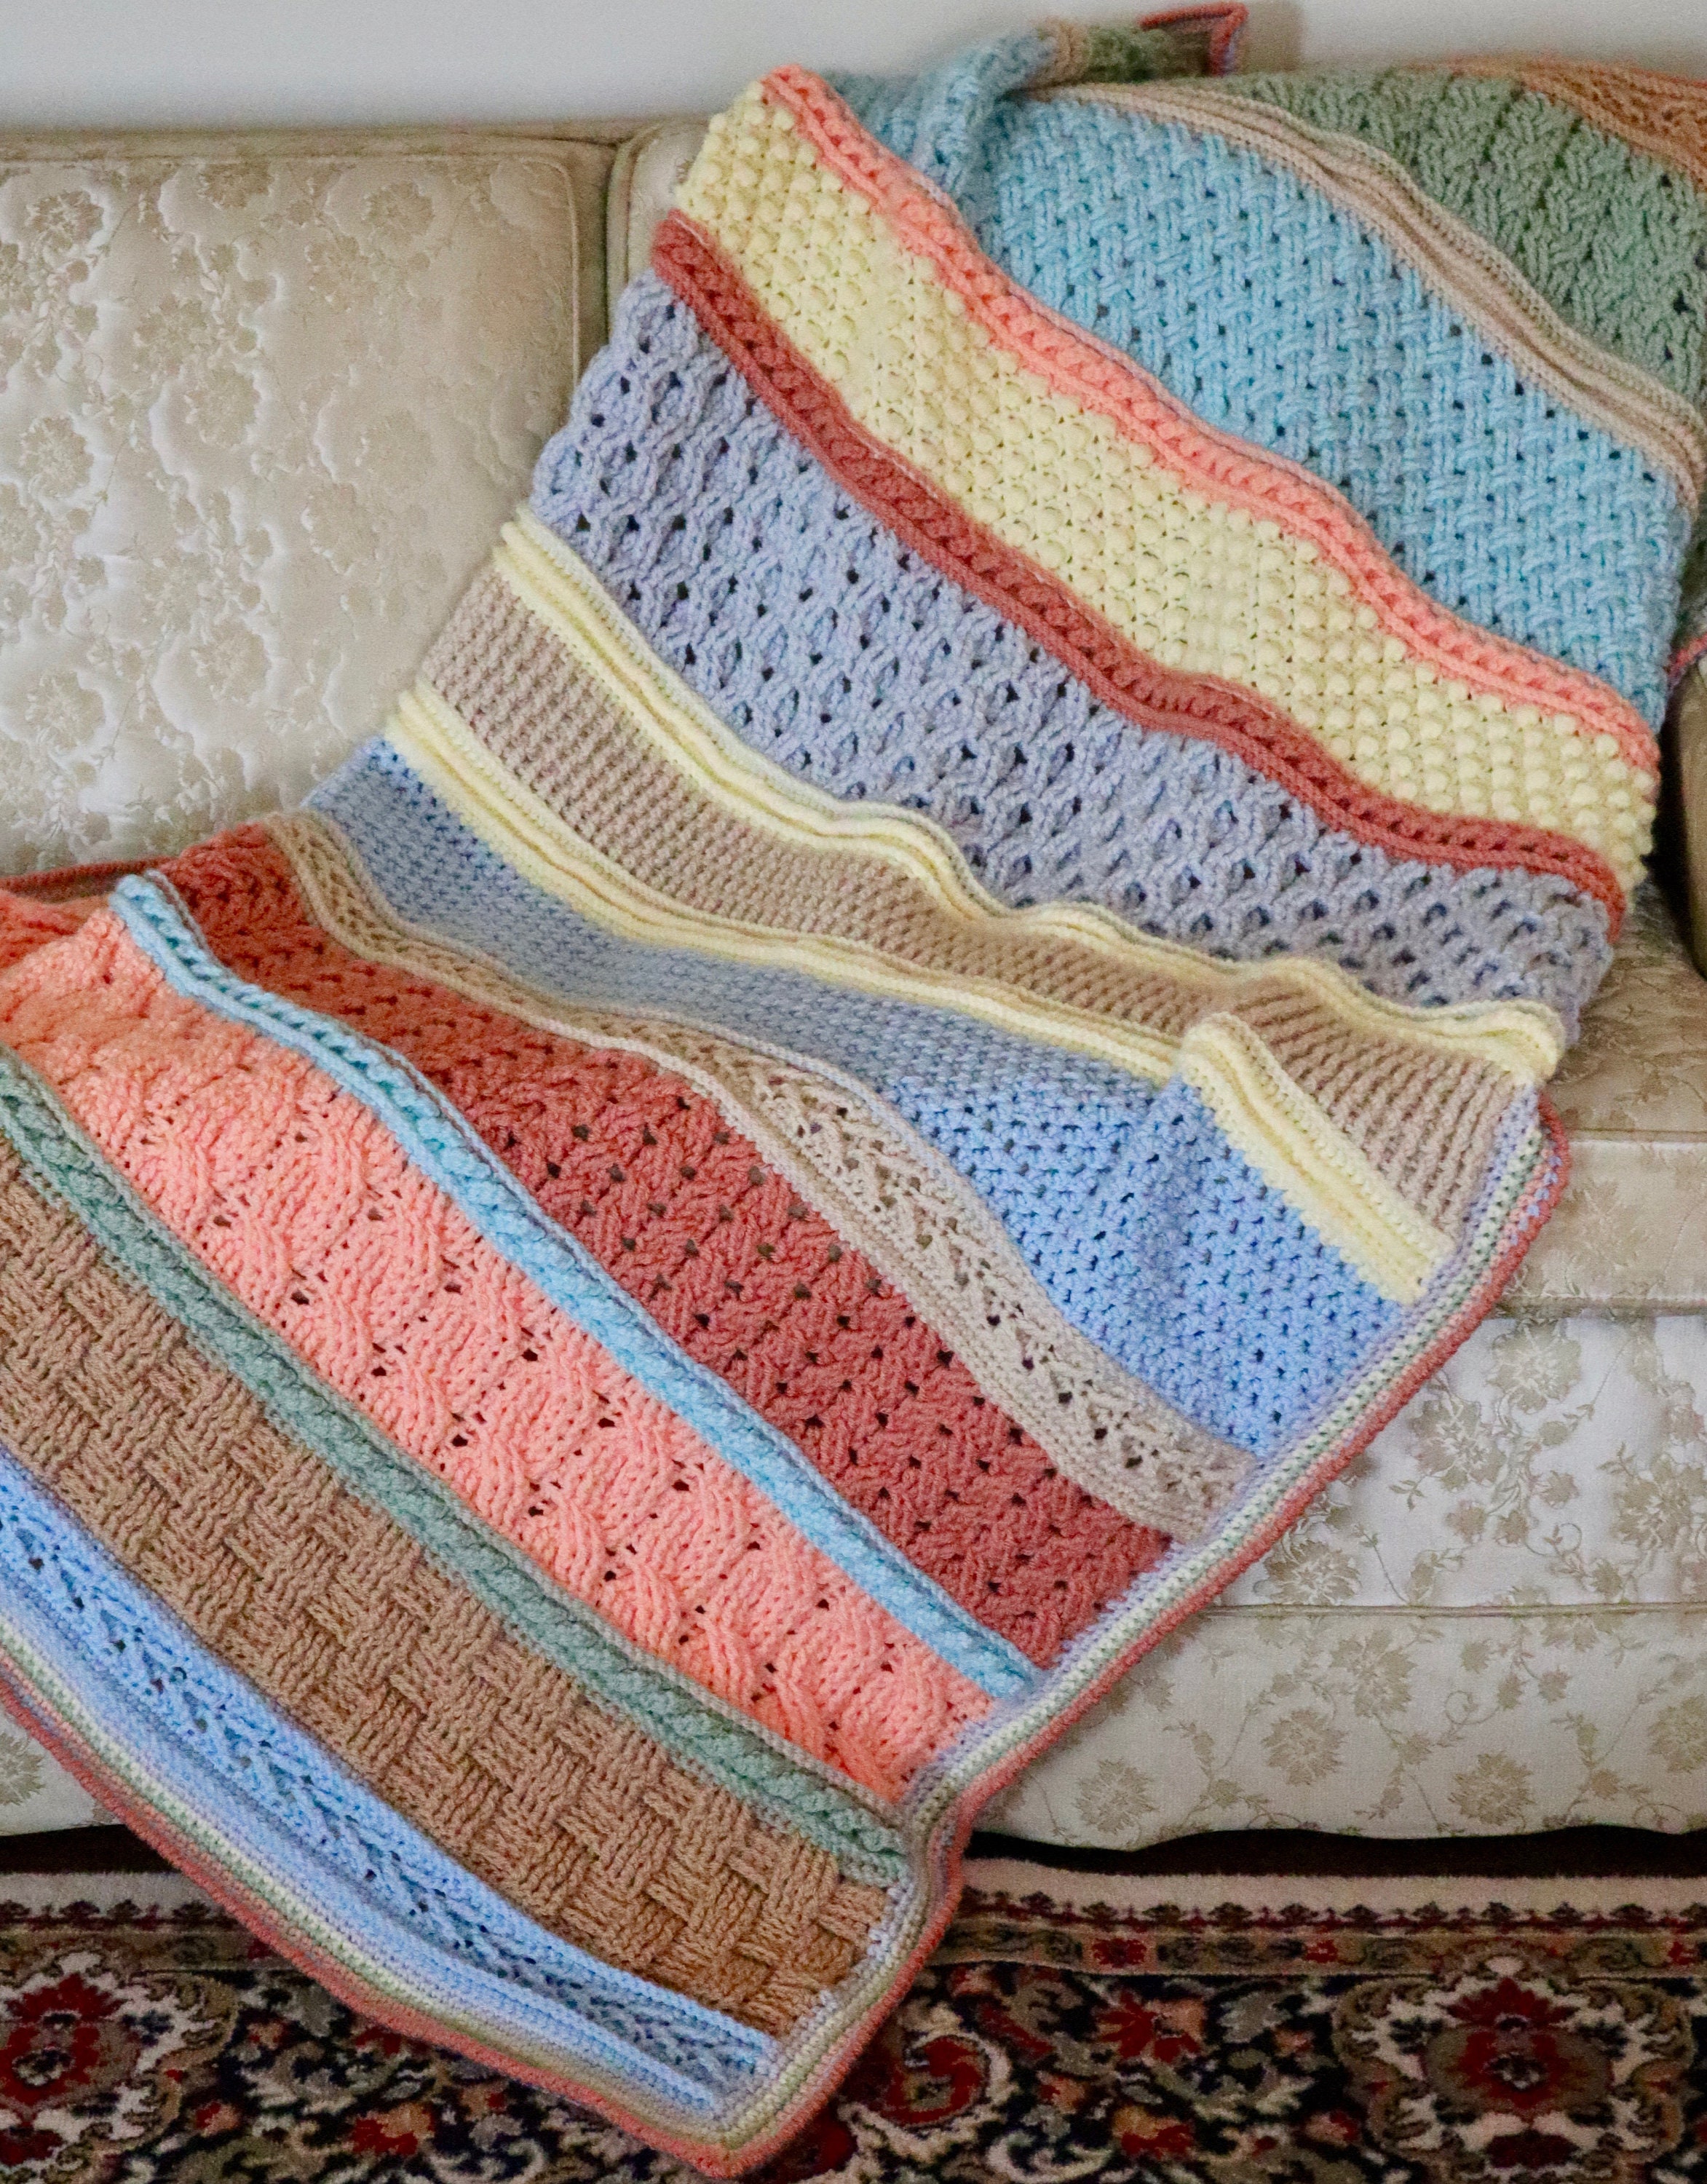 EASY BEGINNER'S Knit Dish Cloth, by Bonnie Barker 